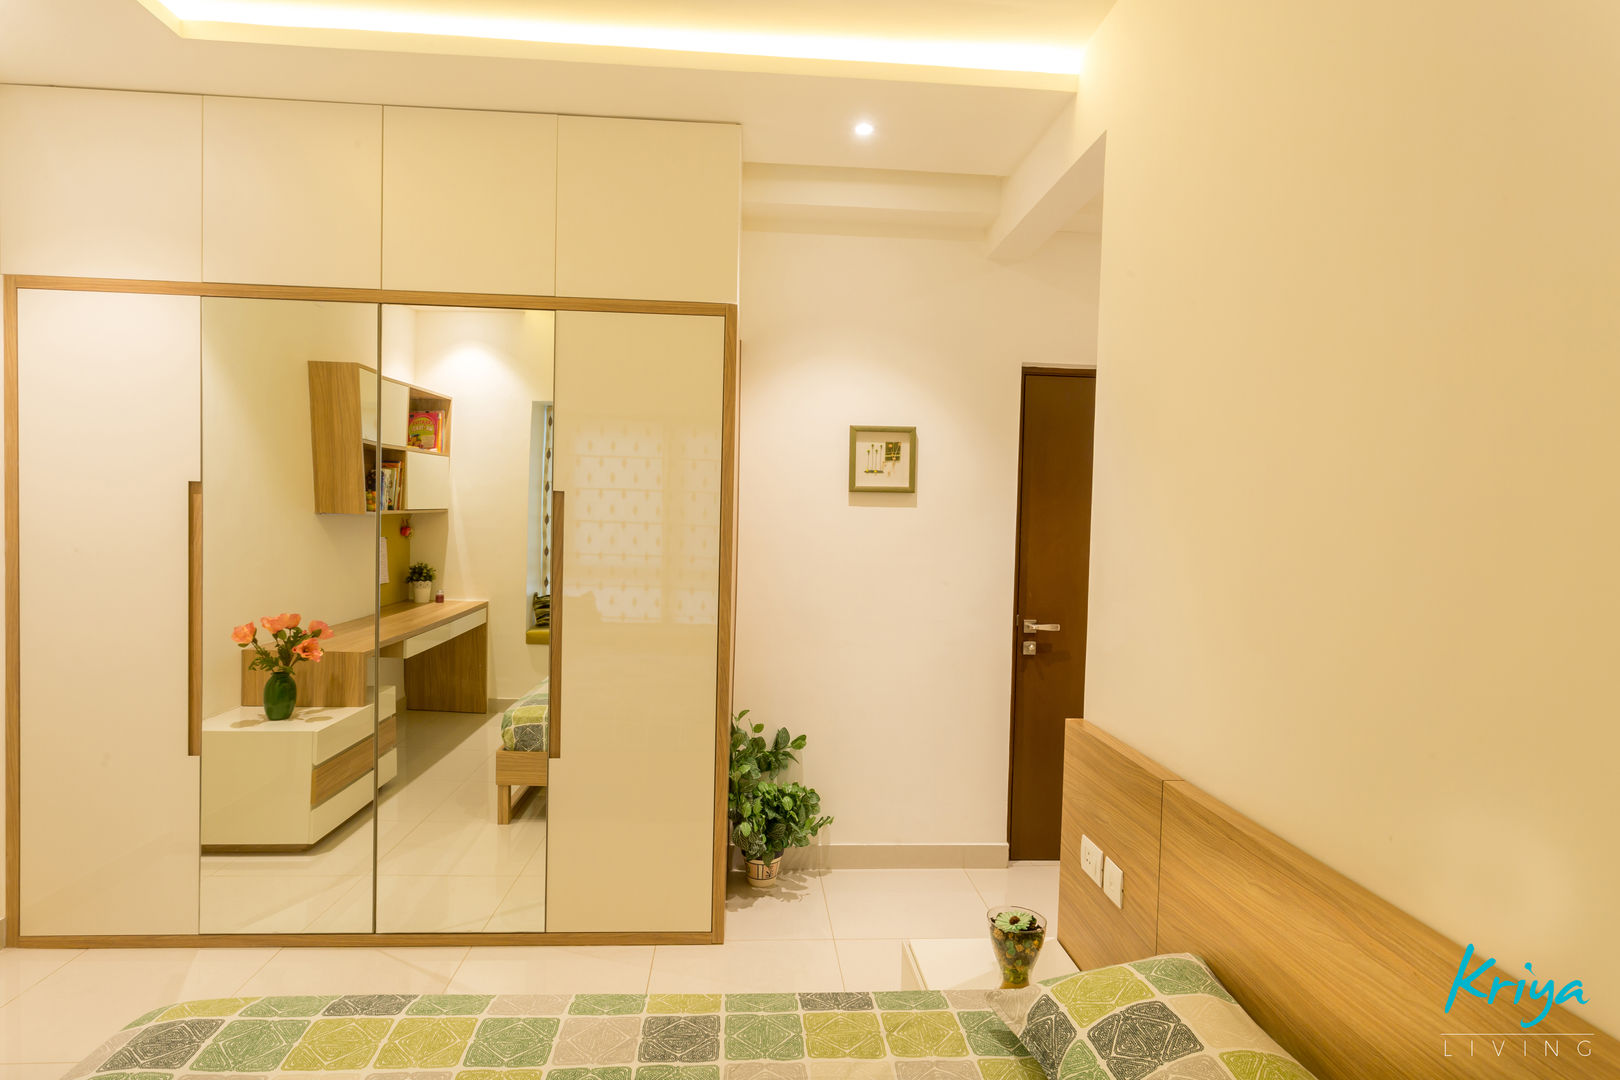 3 BHK apartment - RMZ Galleria, Bengaluru, KRIYA LIVING KRIYA LIVING Chambre moderne